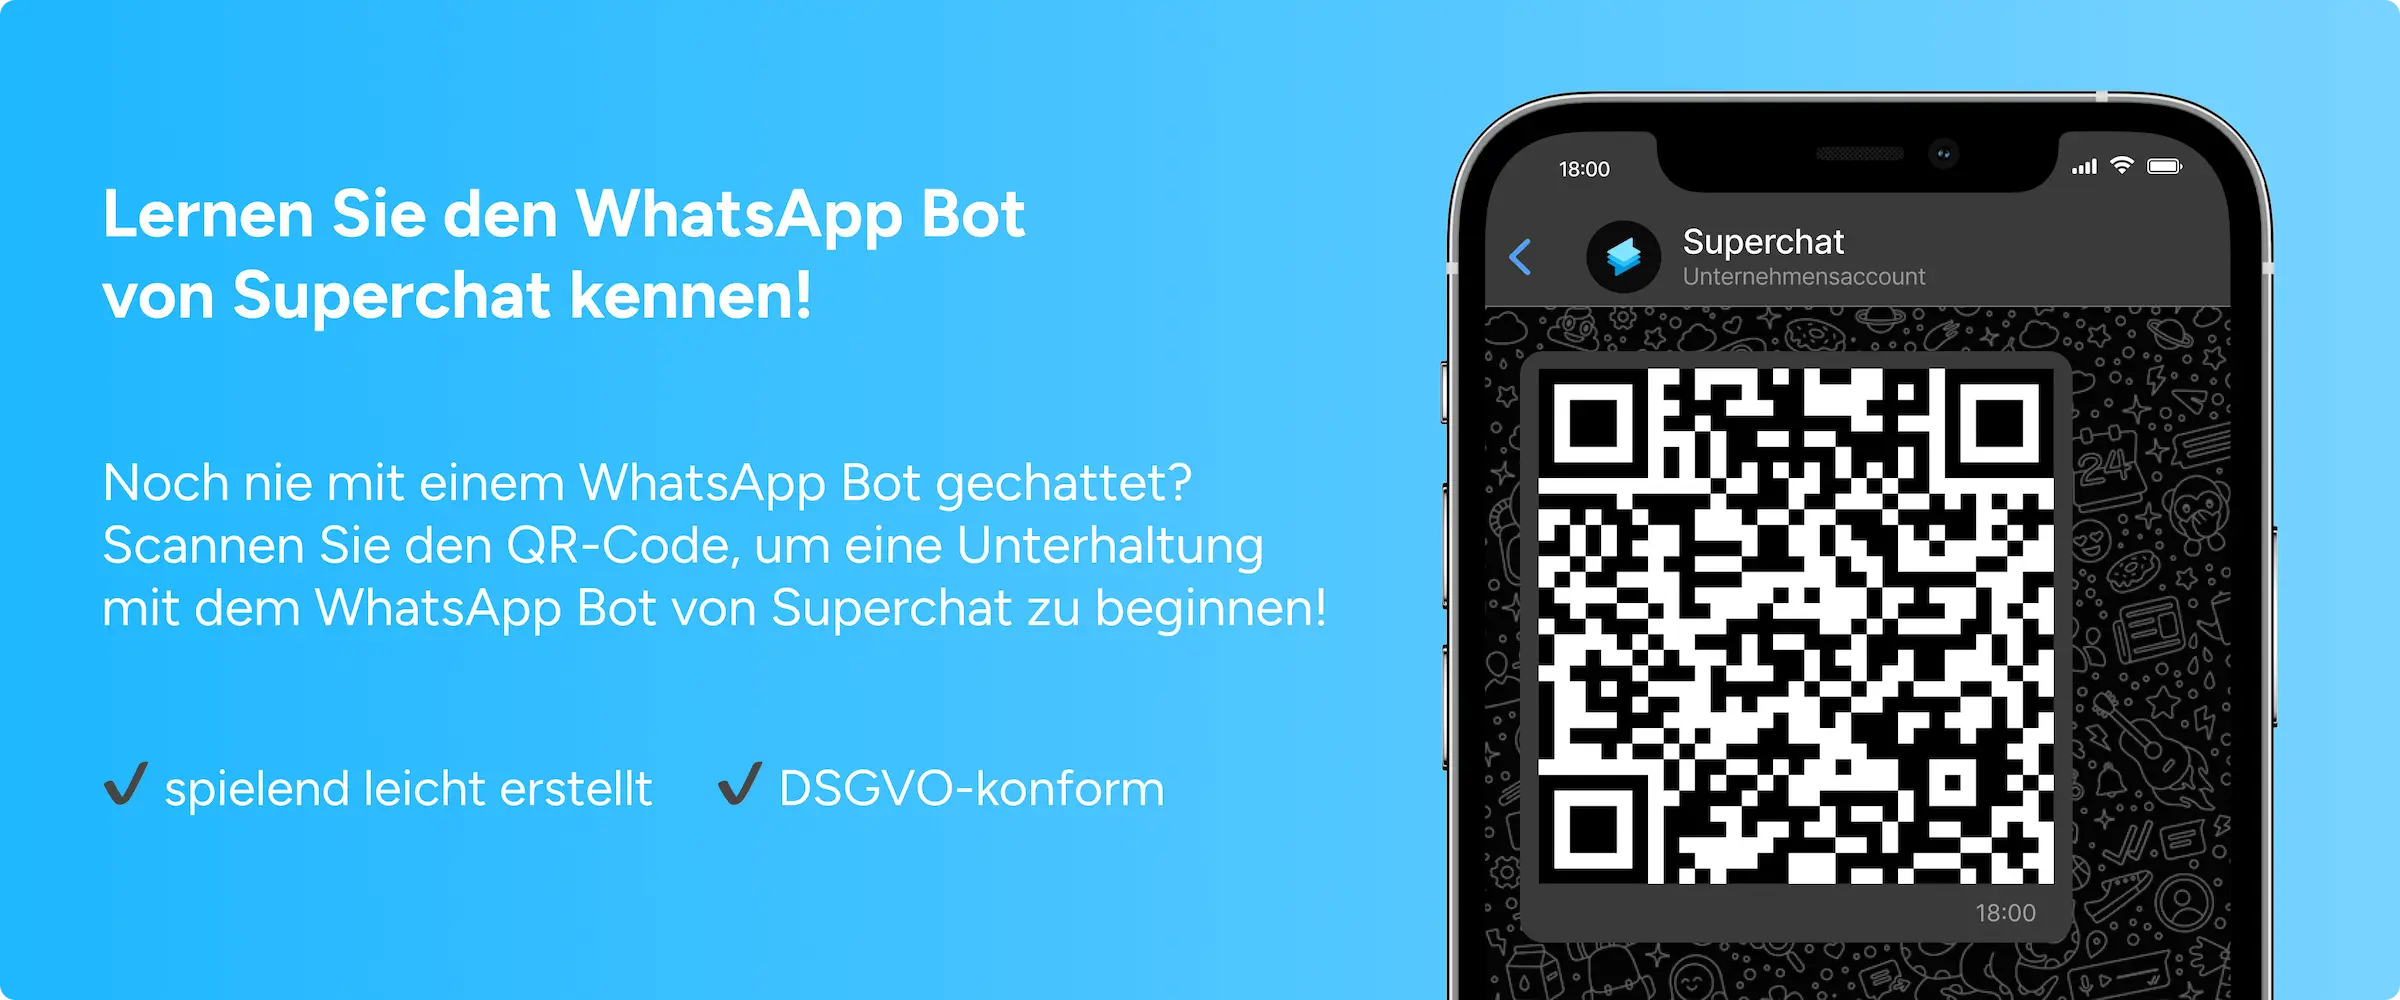 WhatsApp Bot Banner - Generic - Deutsch.webp